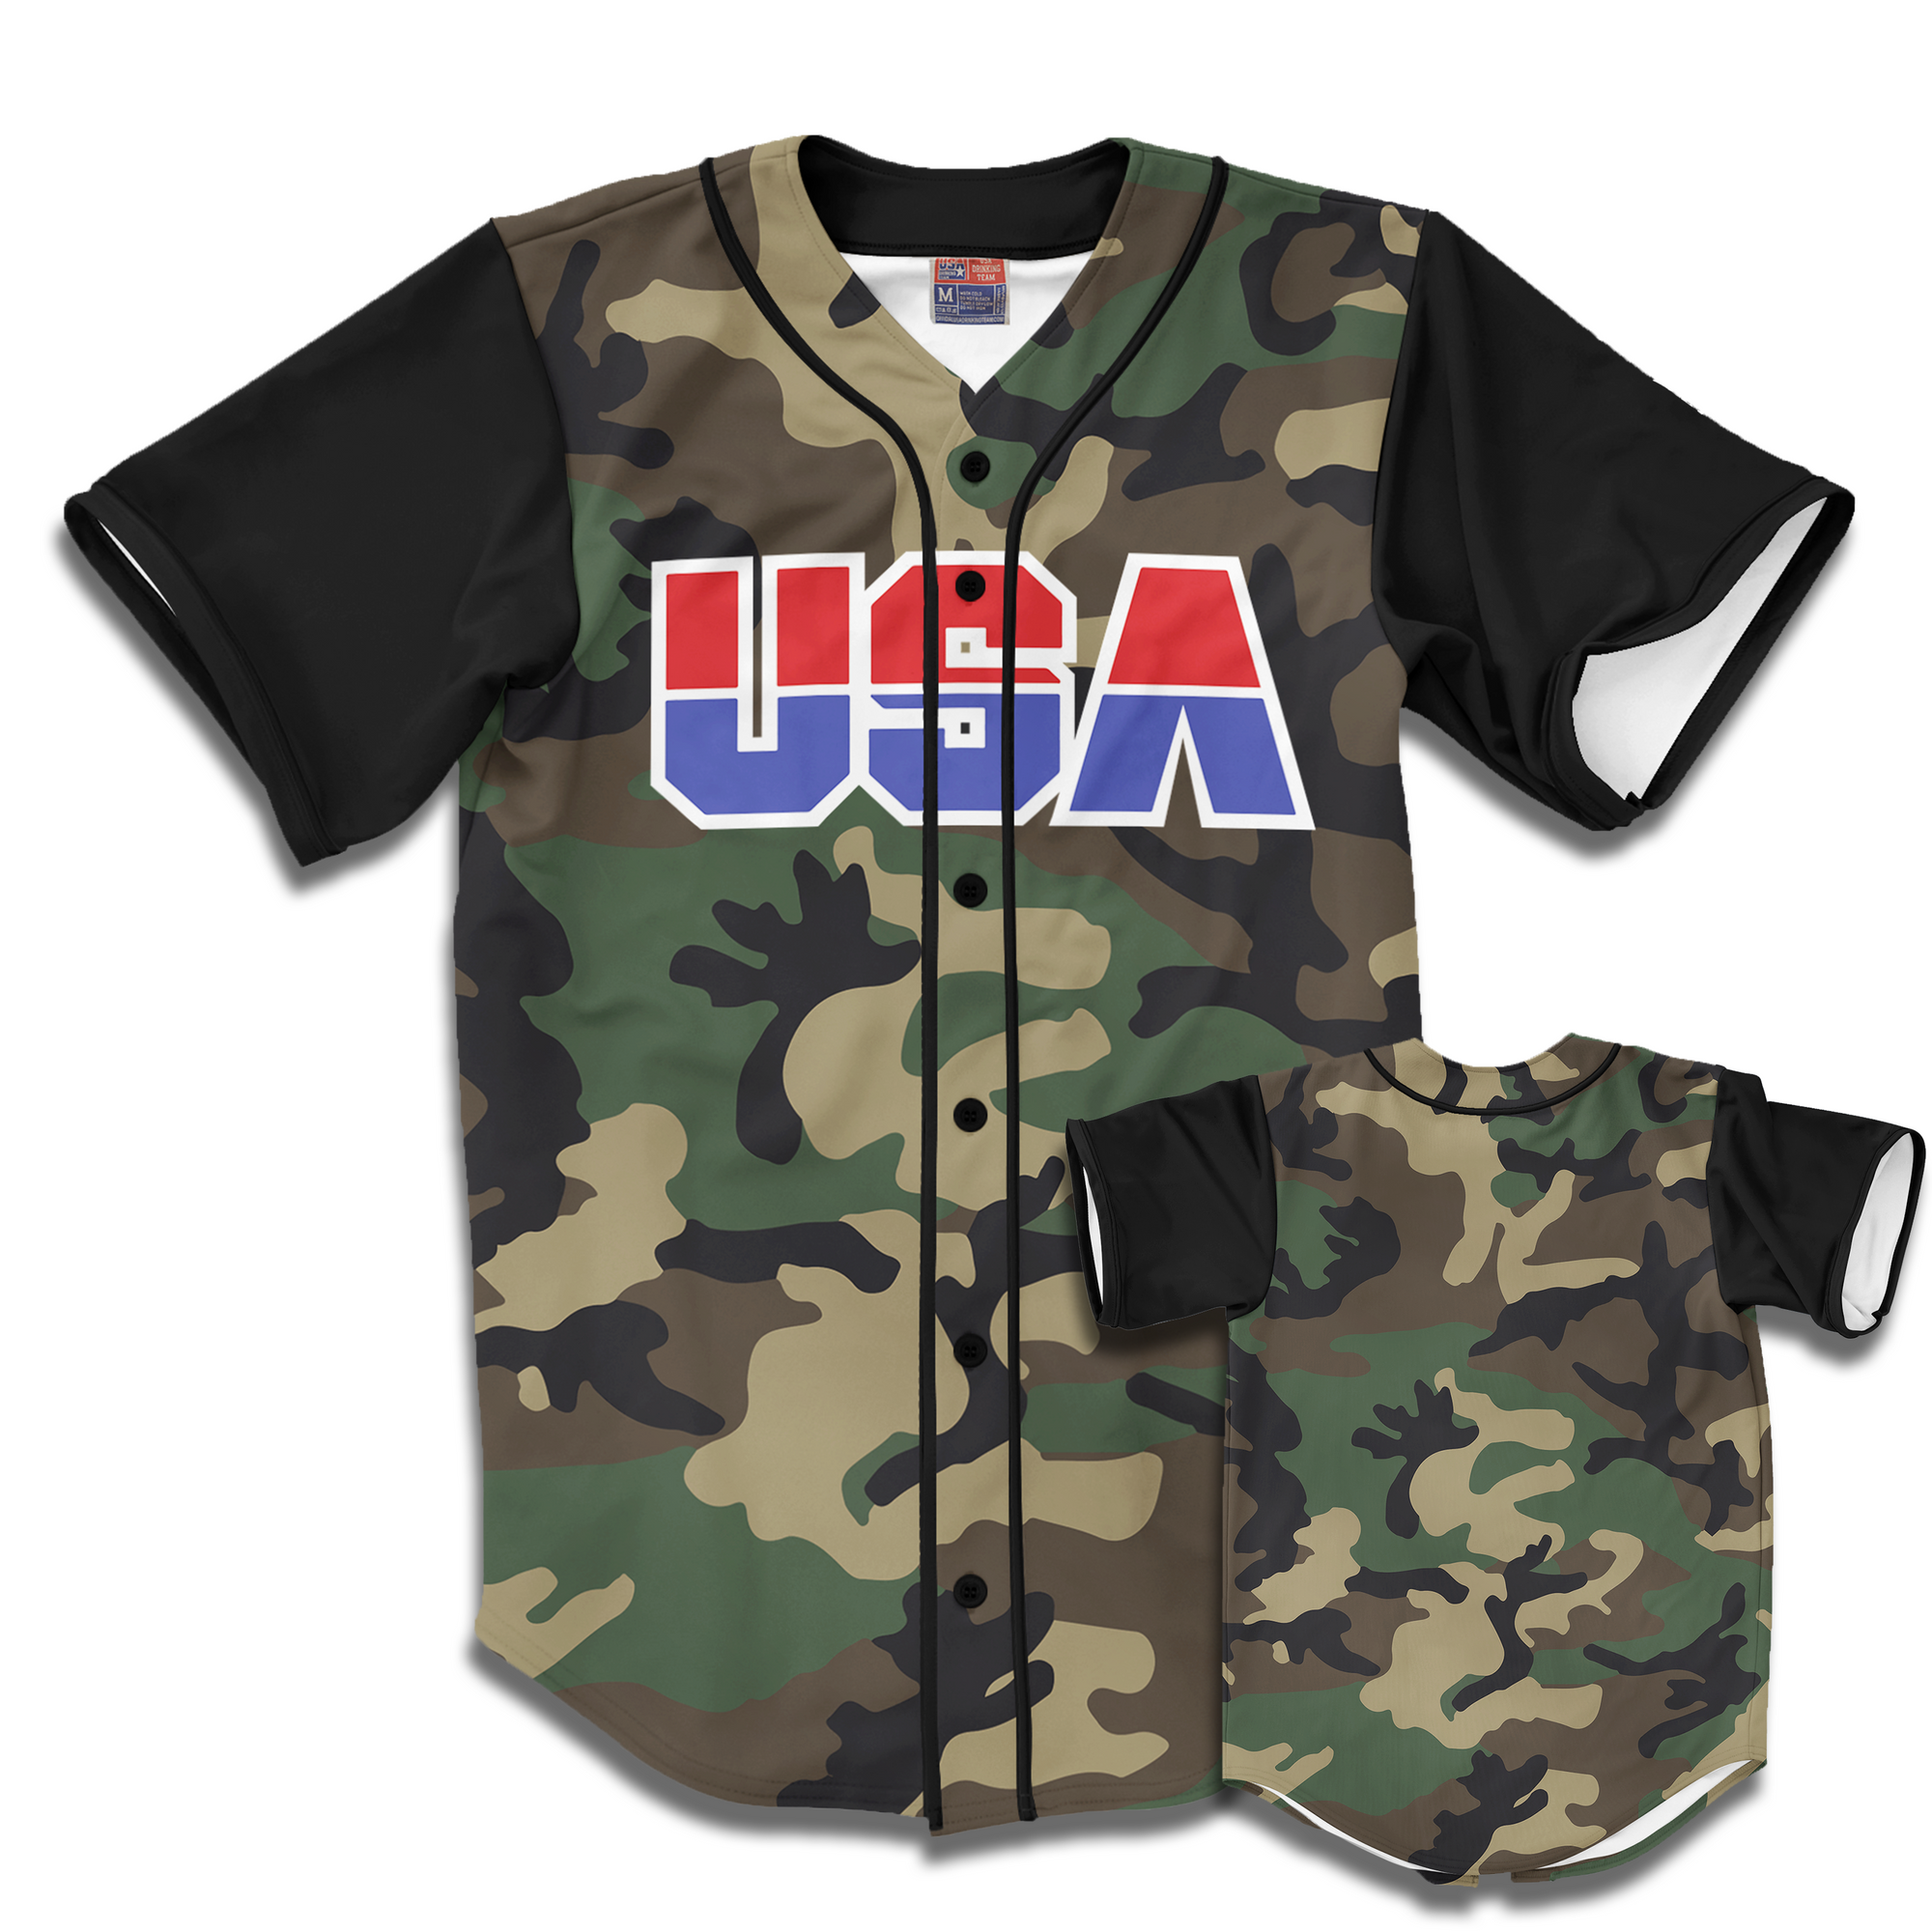 USA Baseball Jersey Camo (Green) - USA Drinking Team